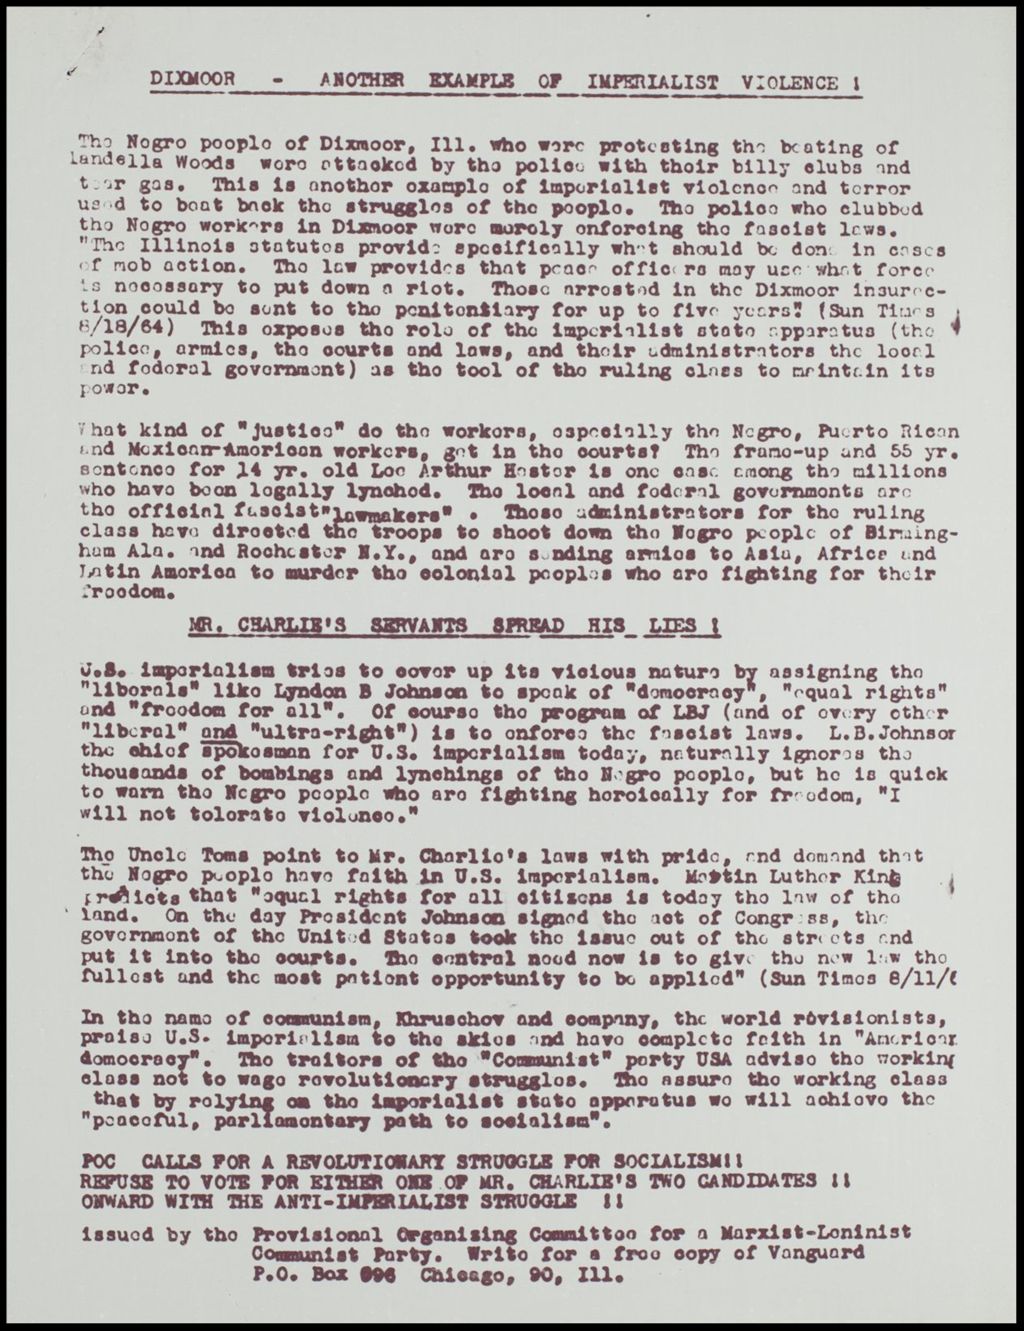 Miniature of Dixmoor riot - correspondence, 1964 (Folder I-2973)